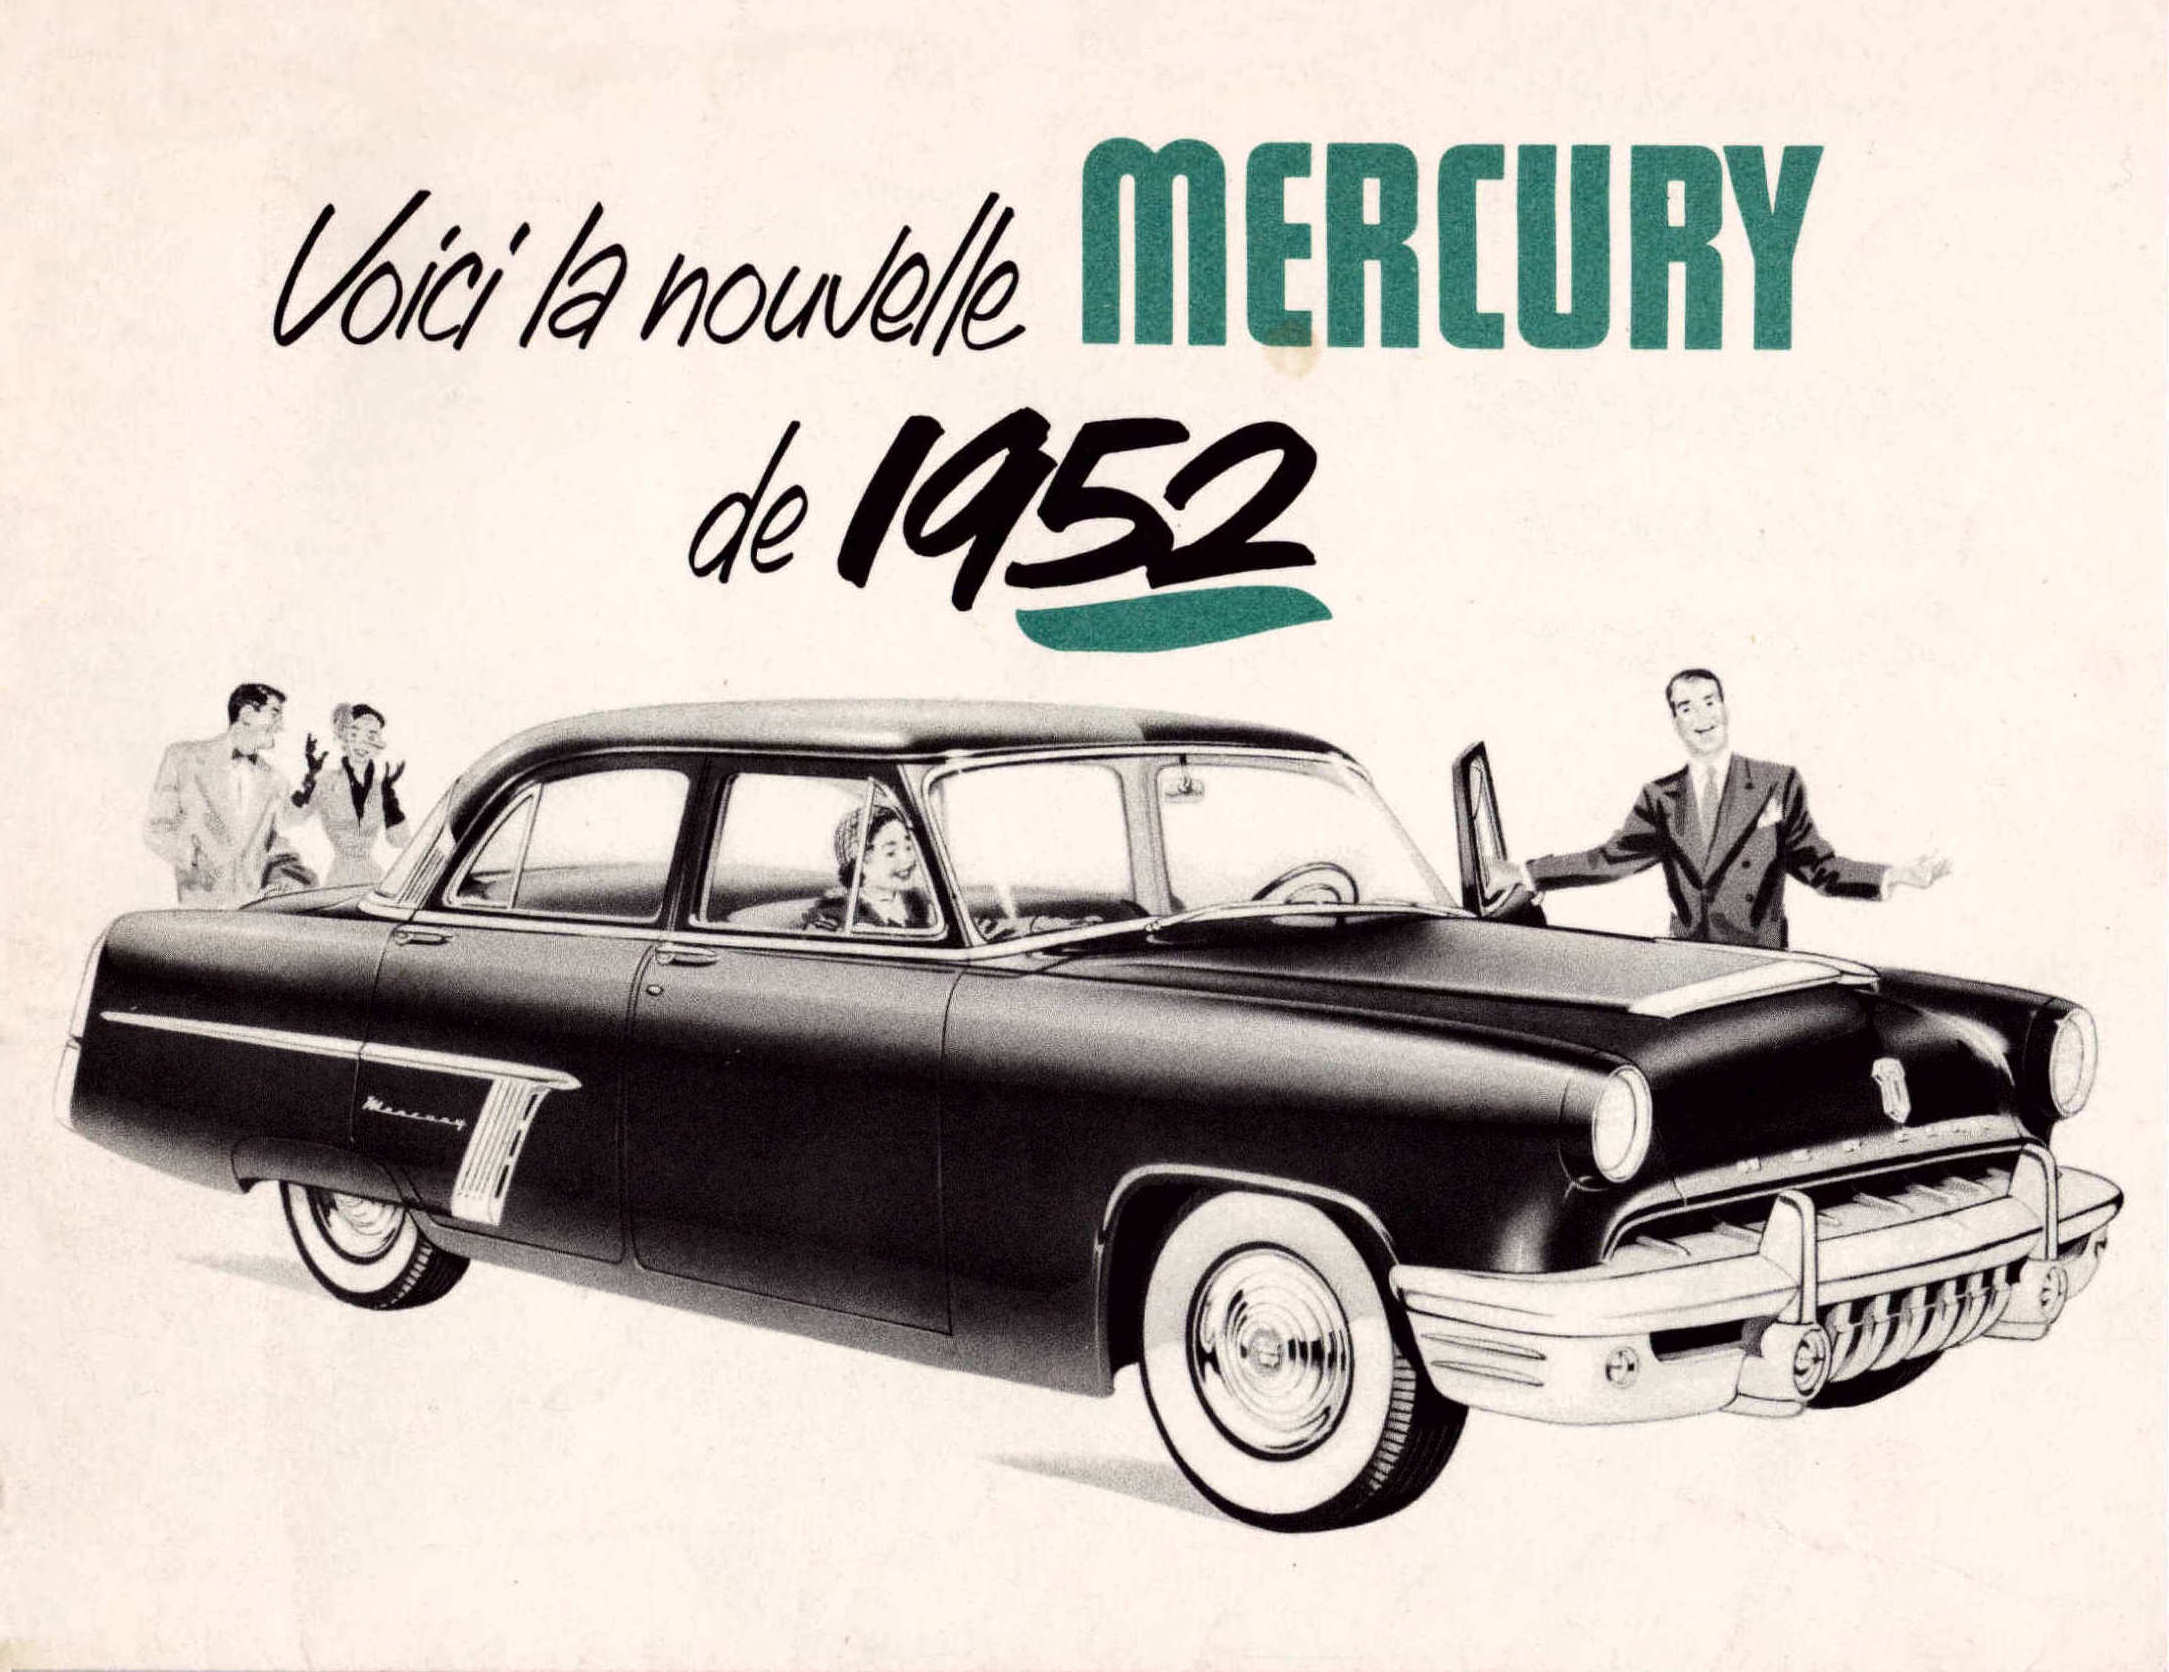 1952_Mercury_Foldout-0a